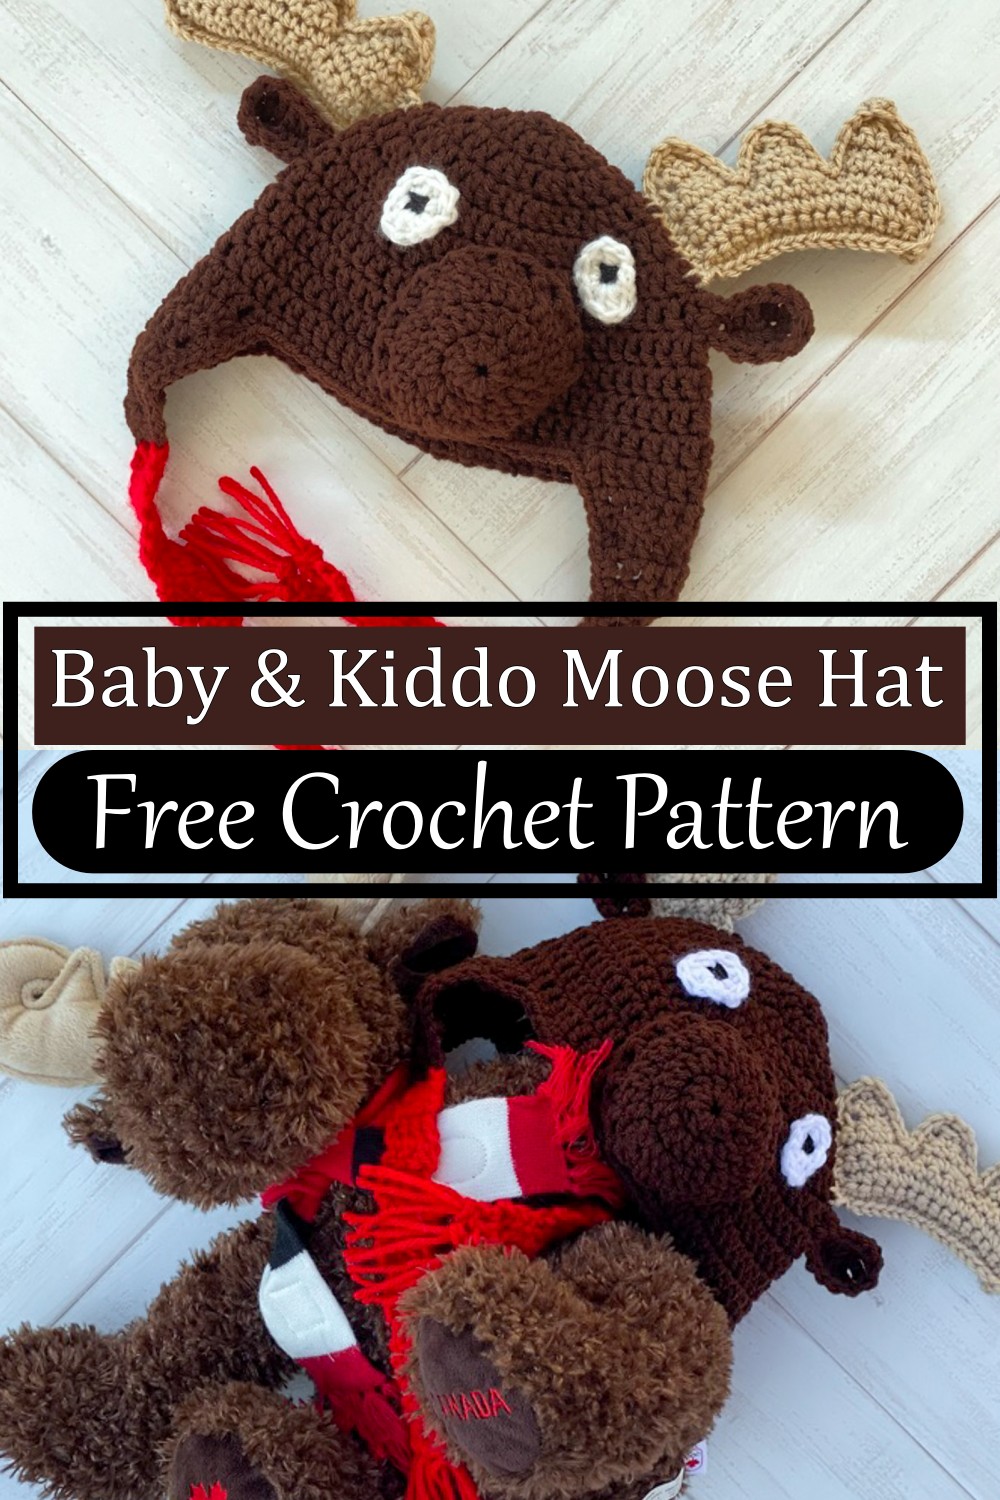 Baby & Kiddo Moose Hat